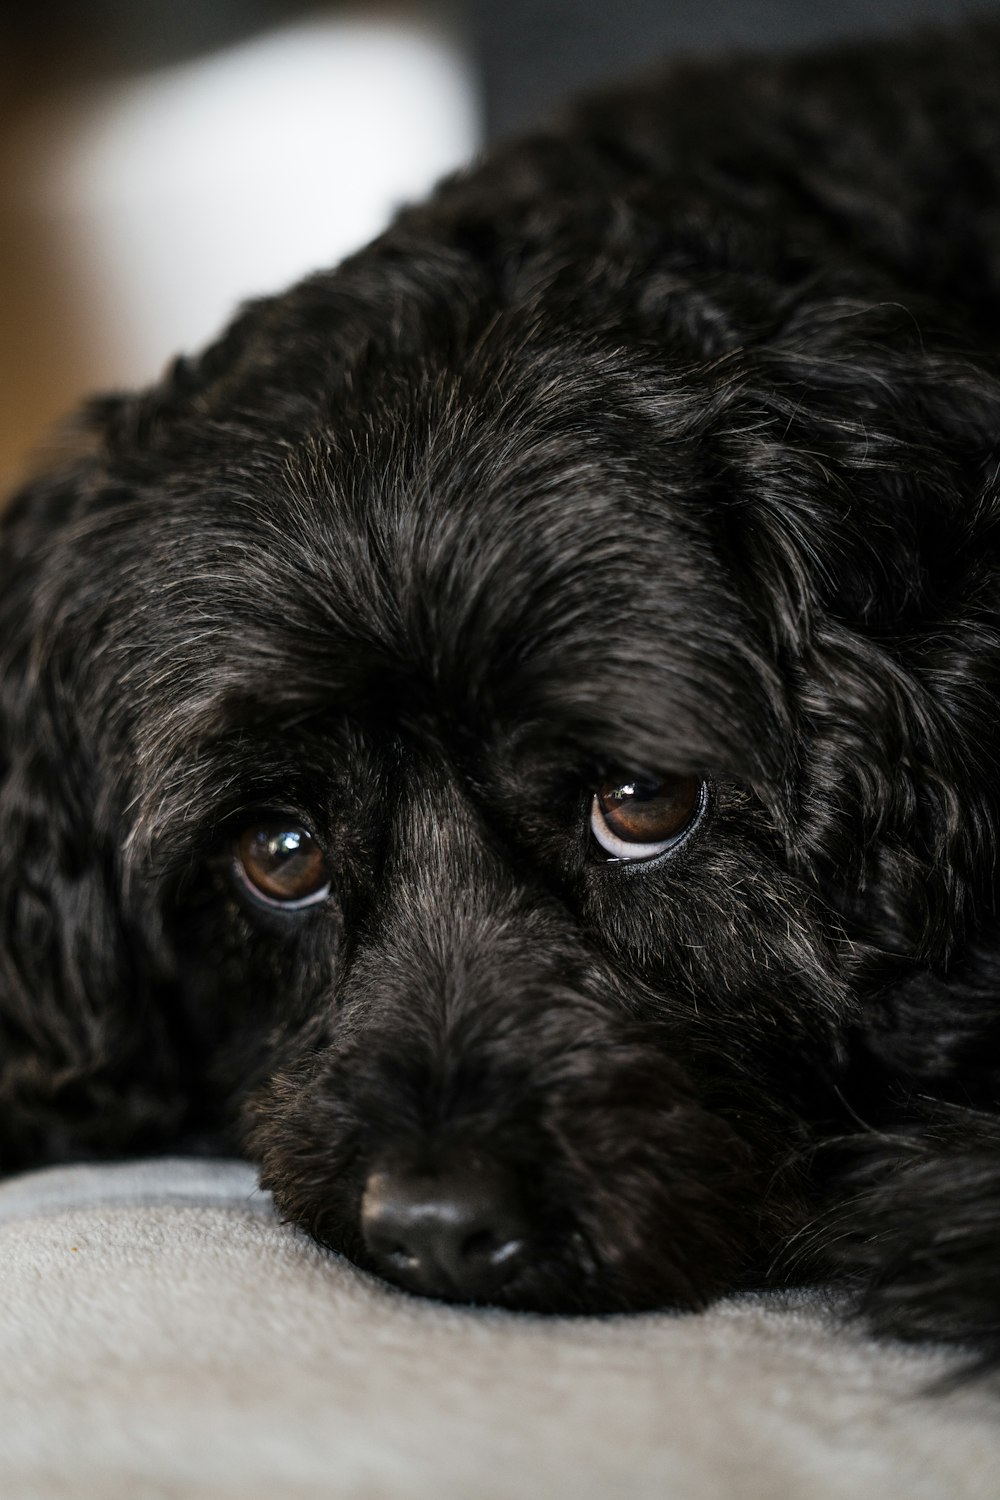 Black long coat small dog photo – Free Perth wa Image on Unsplash